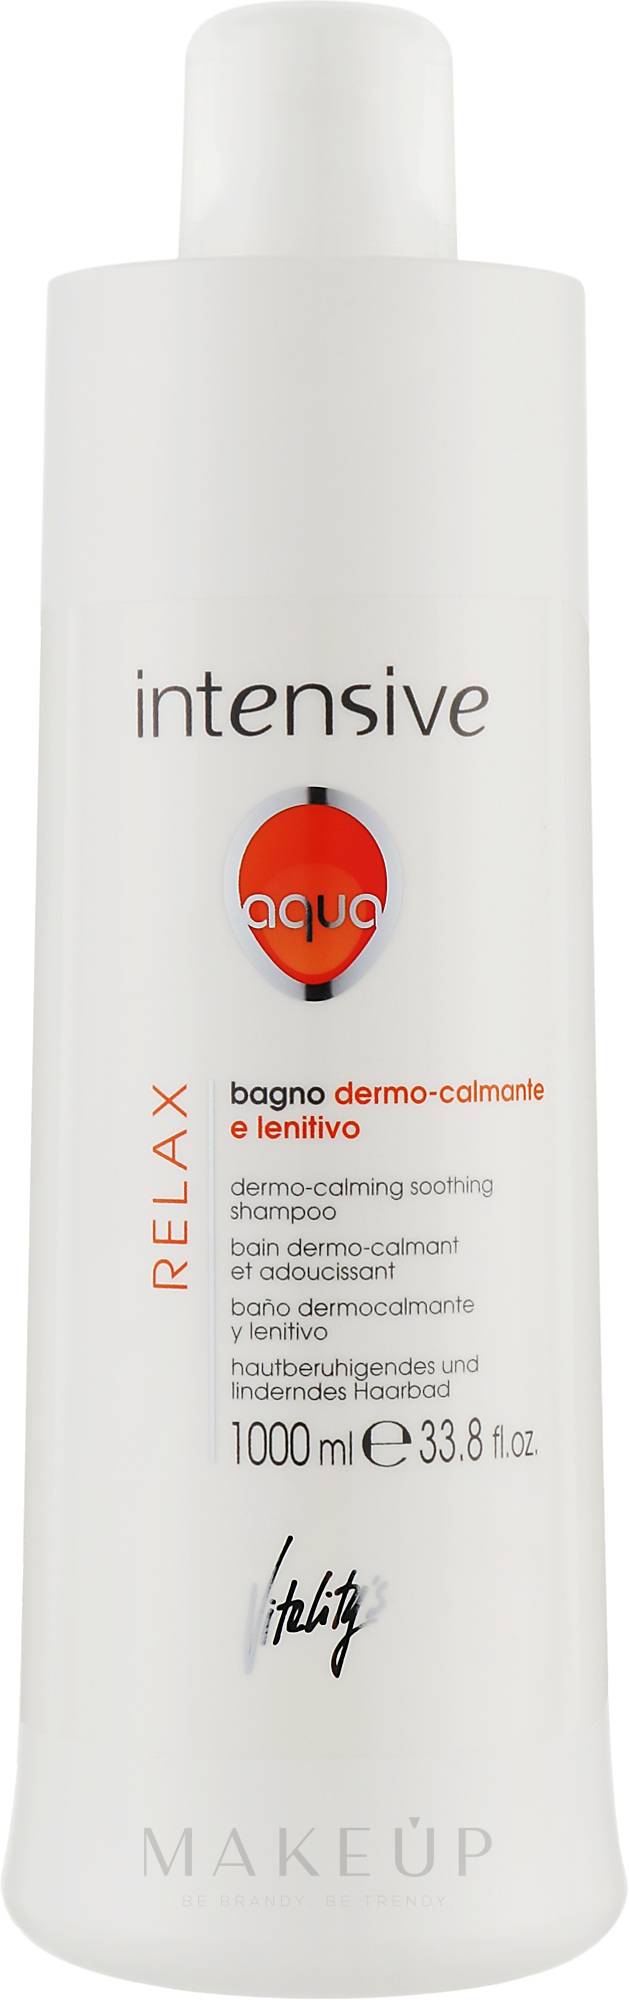 Hautberuhigendes und linderndes Haarbad - Vitality's Intensive Aqua Relax Dermo-Calming Shampoo — Bild 1000 ml